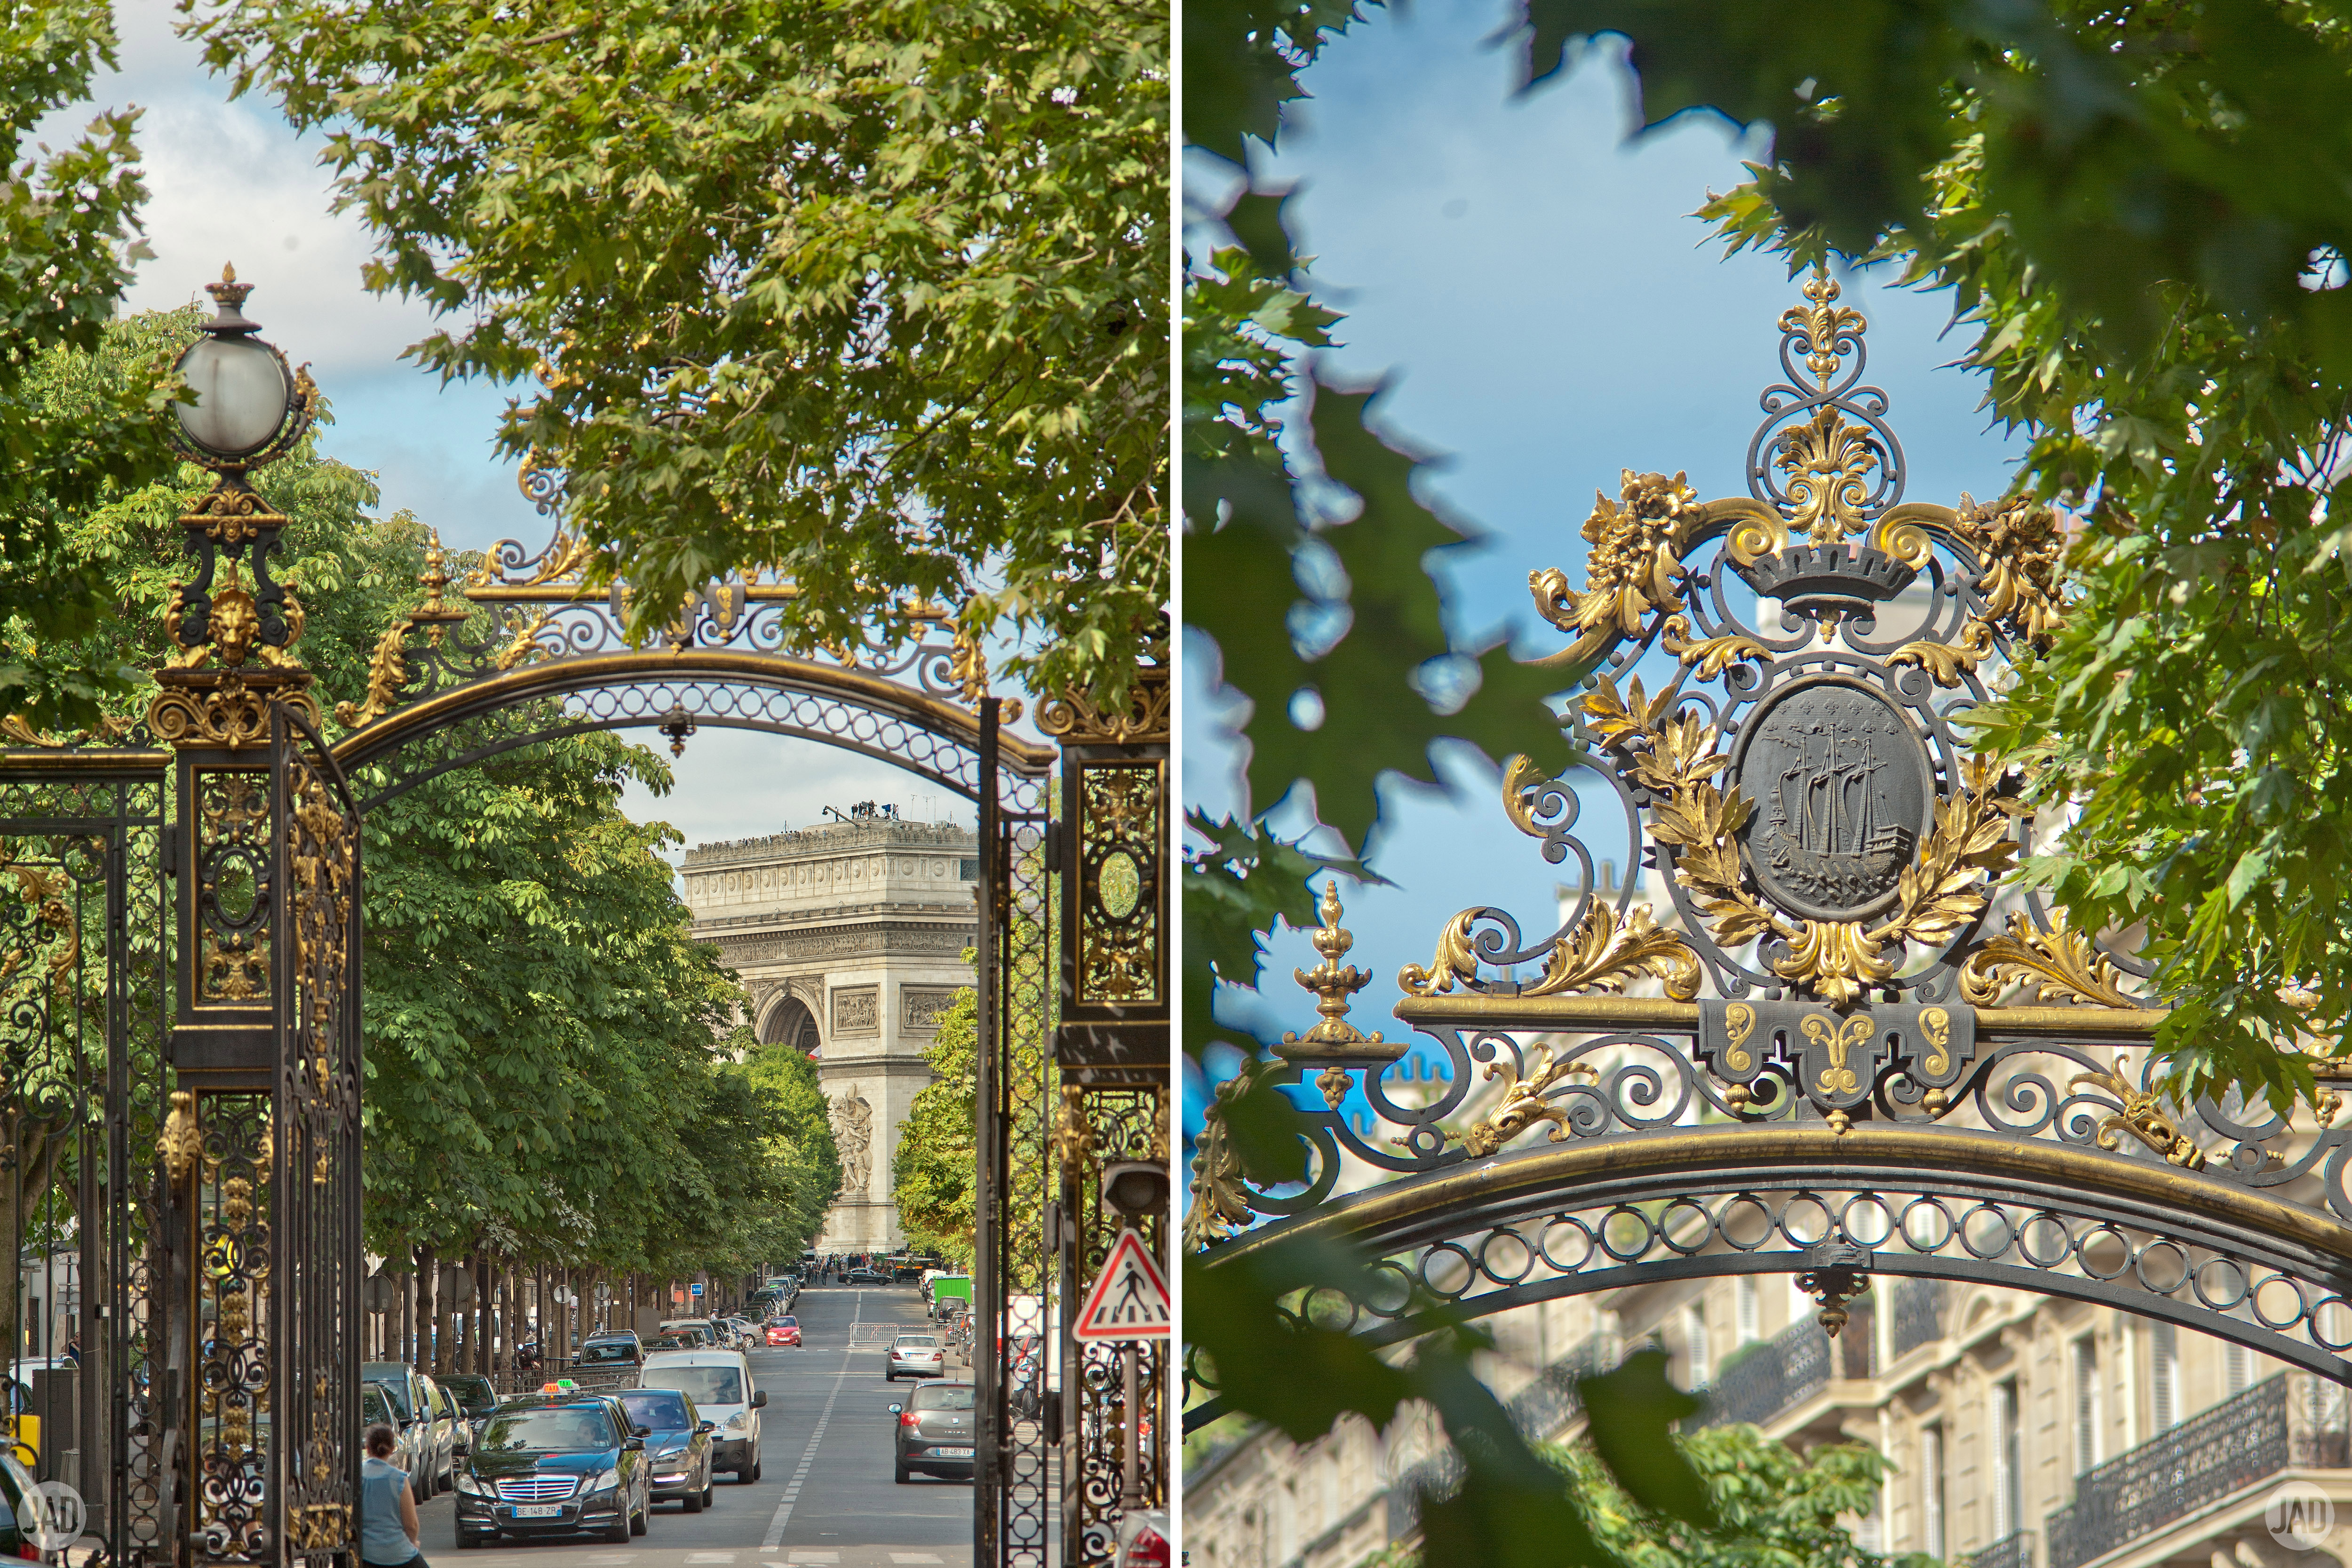 Agence Varenne sets up shop at the heart of Paris’ Golden Triangle